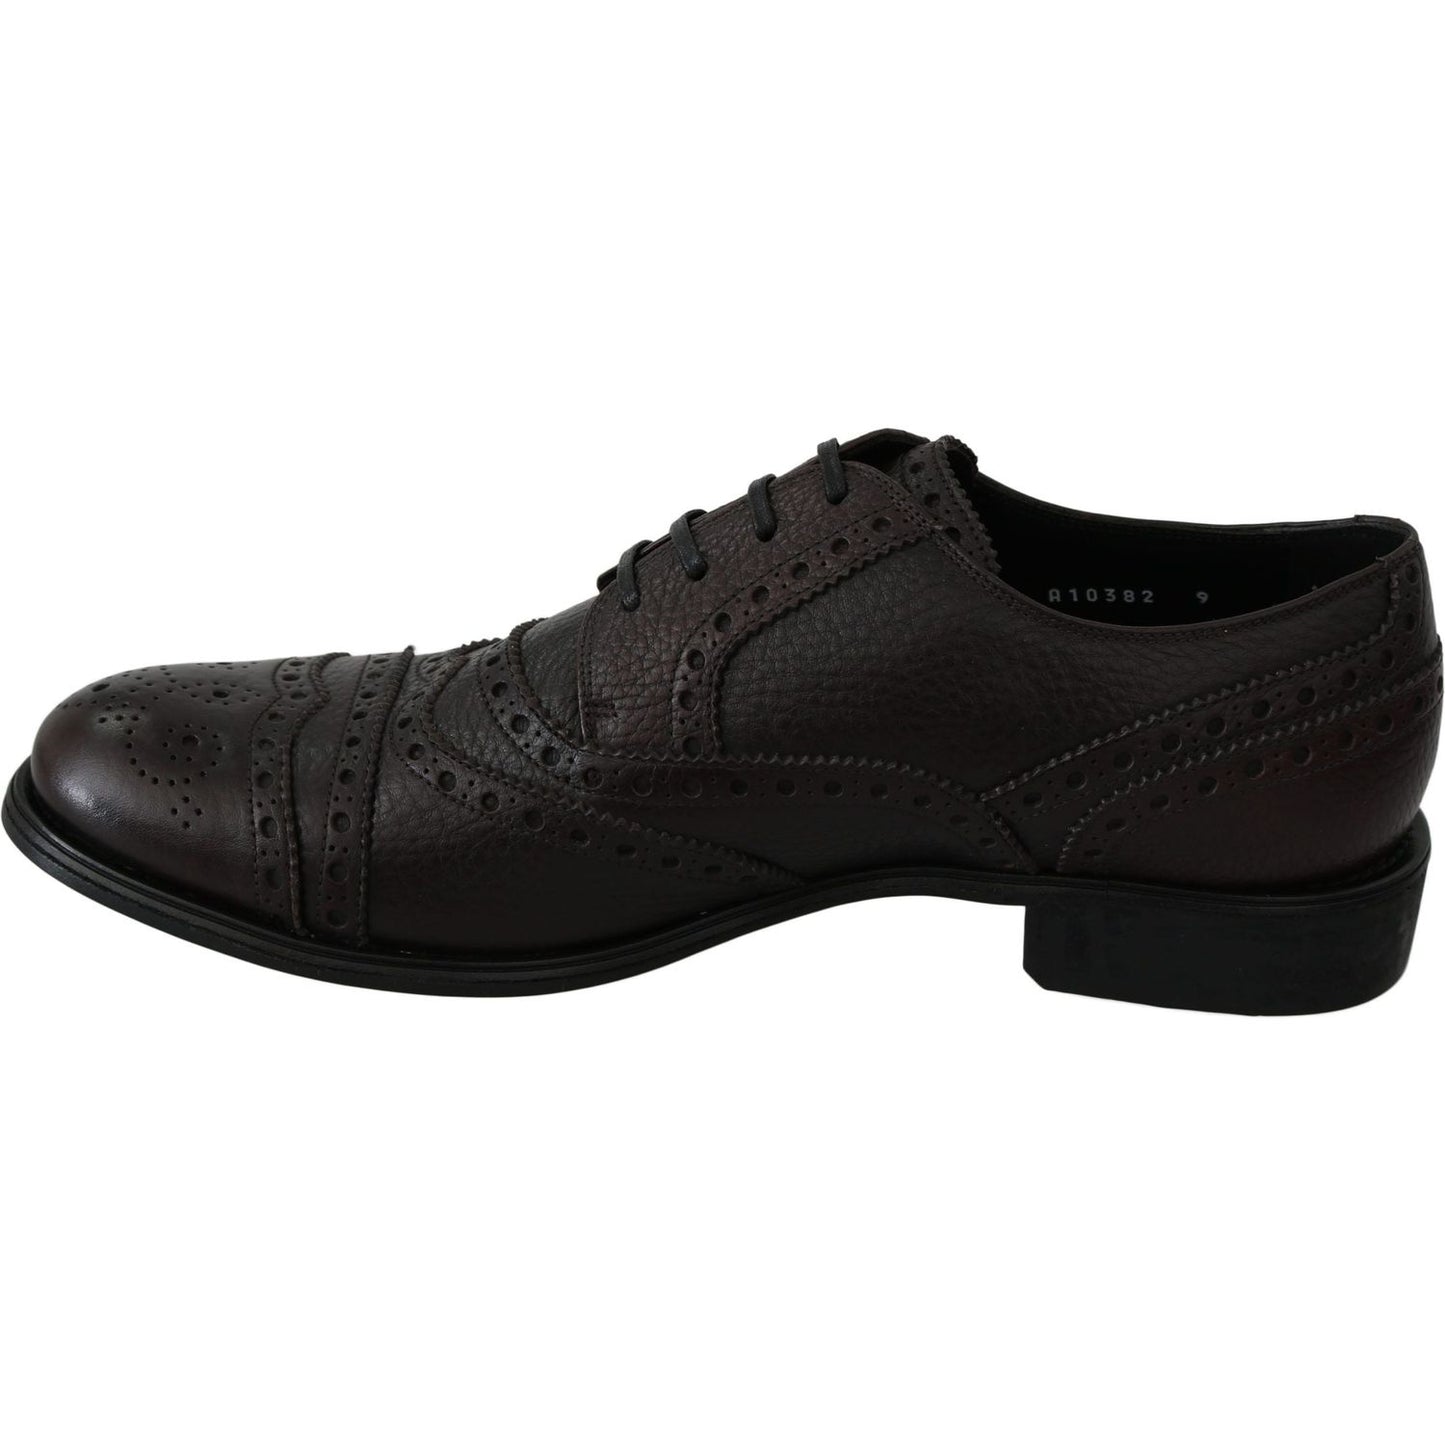 Dolce & Gabbana Elegant Mens Leather Derby Dress Shoes brown-leather-brogue-derby-dress-shoes-1